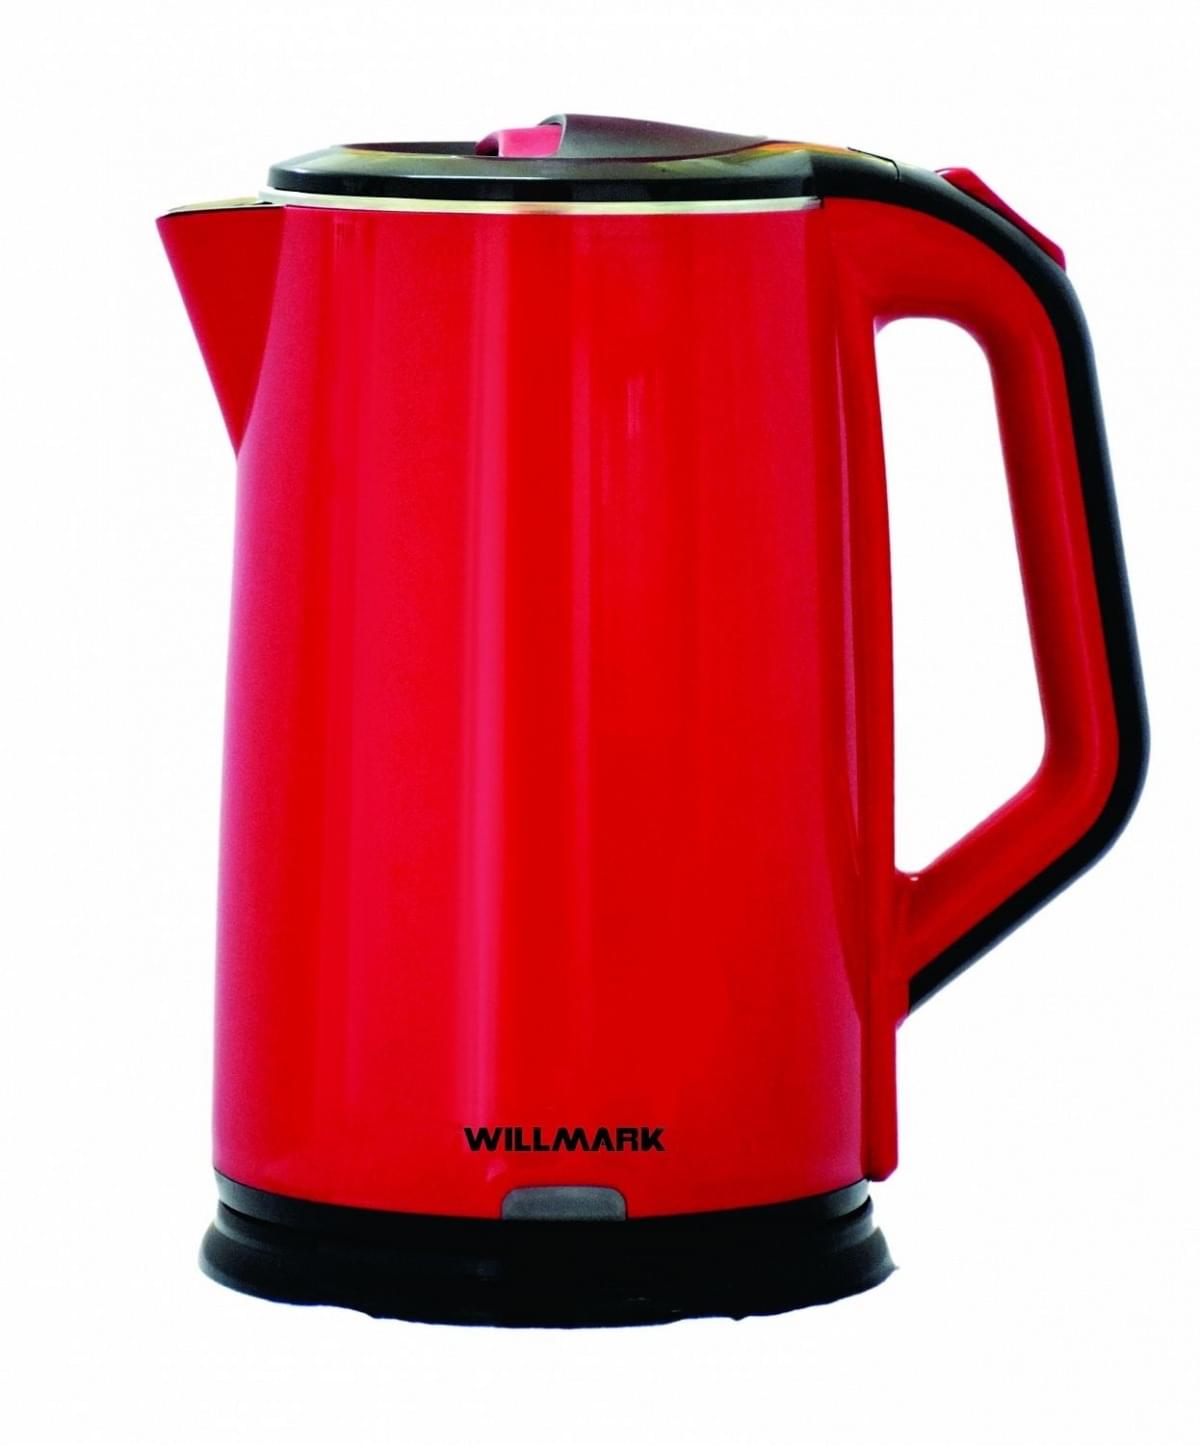 WILLMARK WEK 2012PS (тёмно красный)Чайник - уменьшенная 7